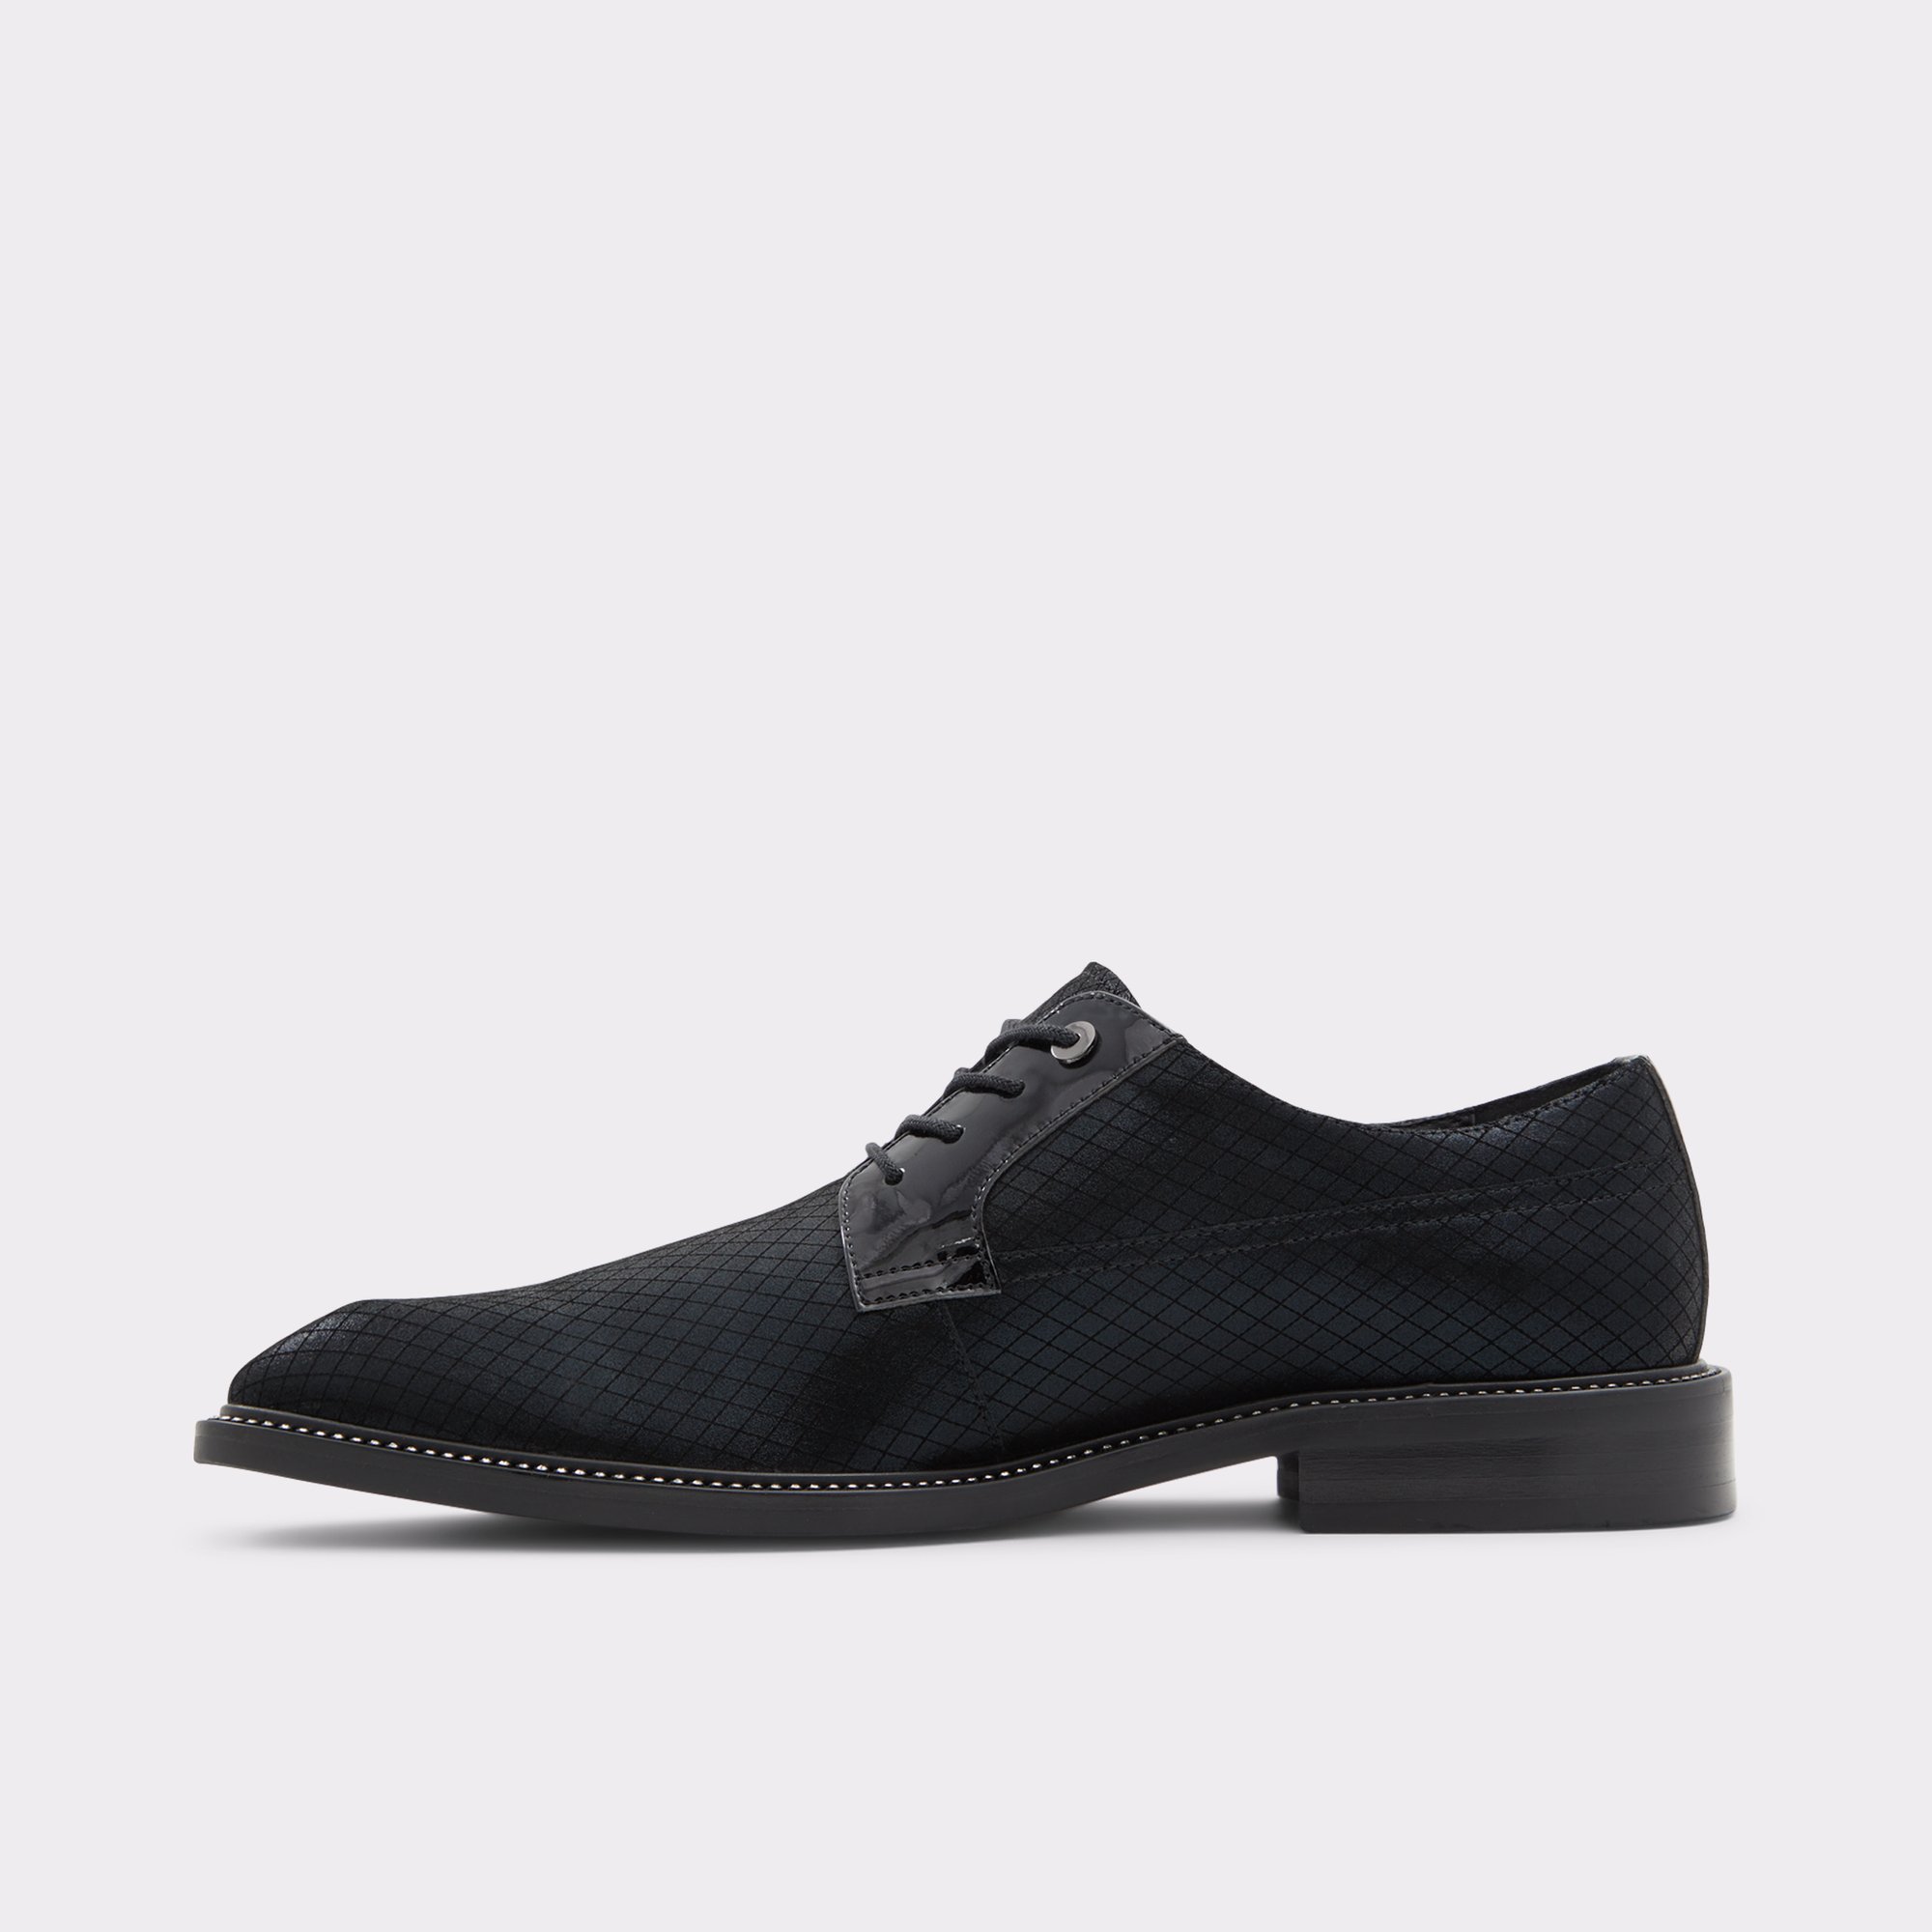 Boyard Black Leather Shiny Men's Dress Shoes | ALDO Canada